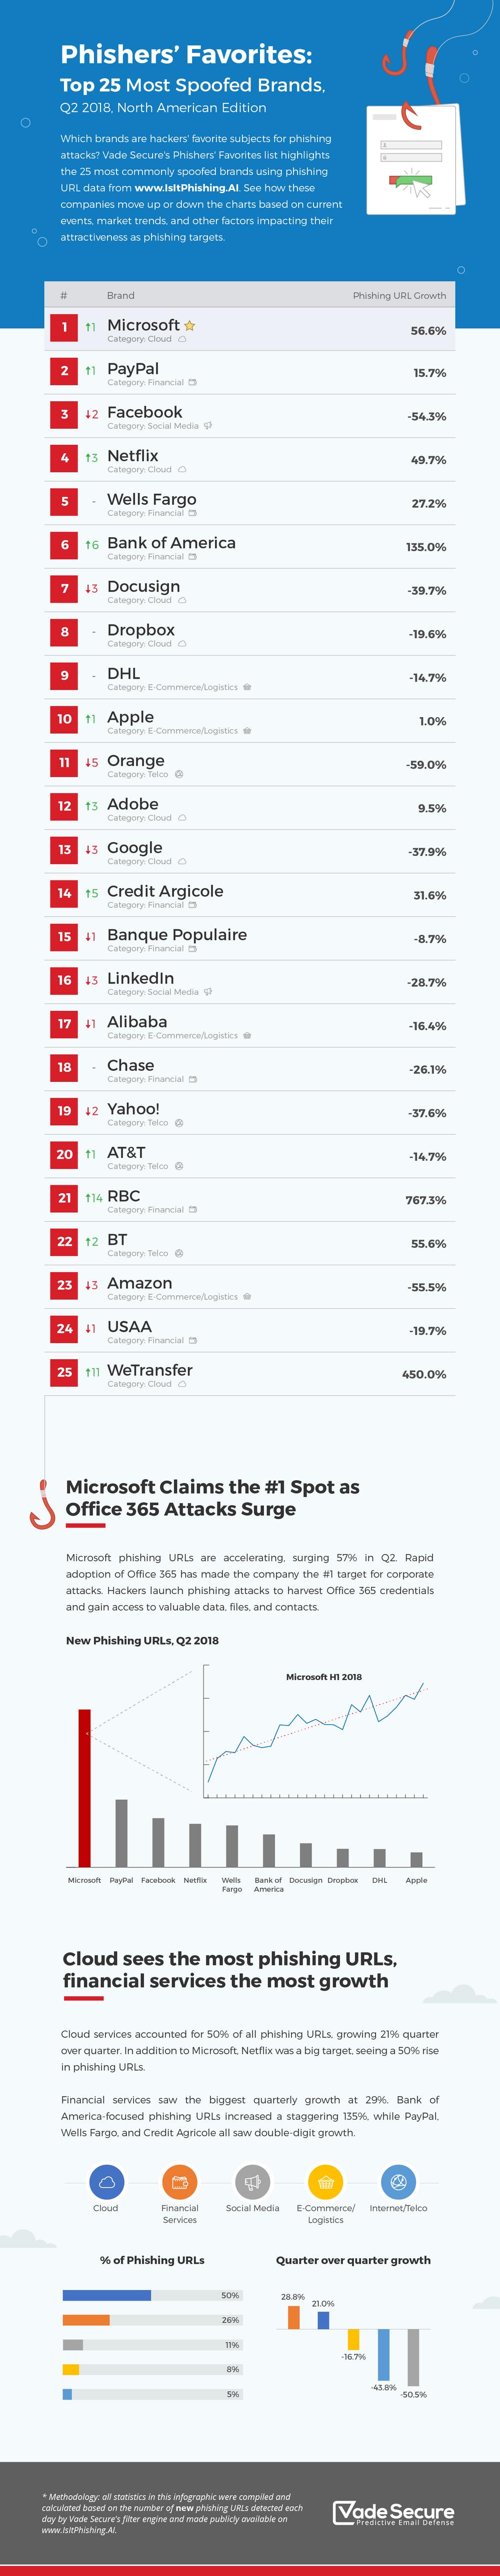 Marcas favoritas de los cibercriminales para ataques de phishing: Microsoft supera a Facebook 1